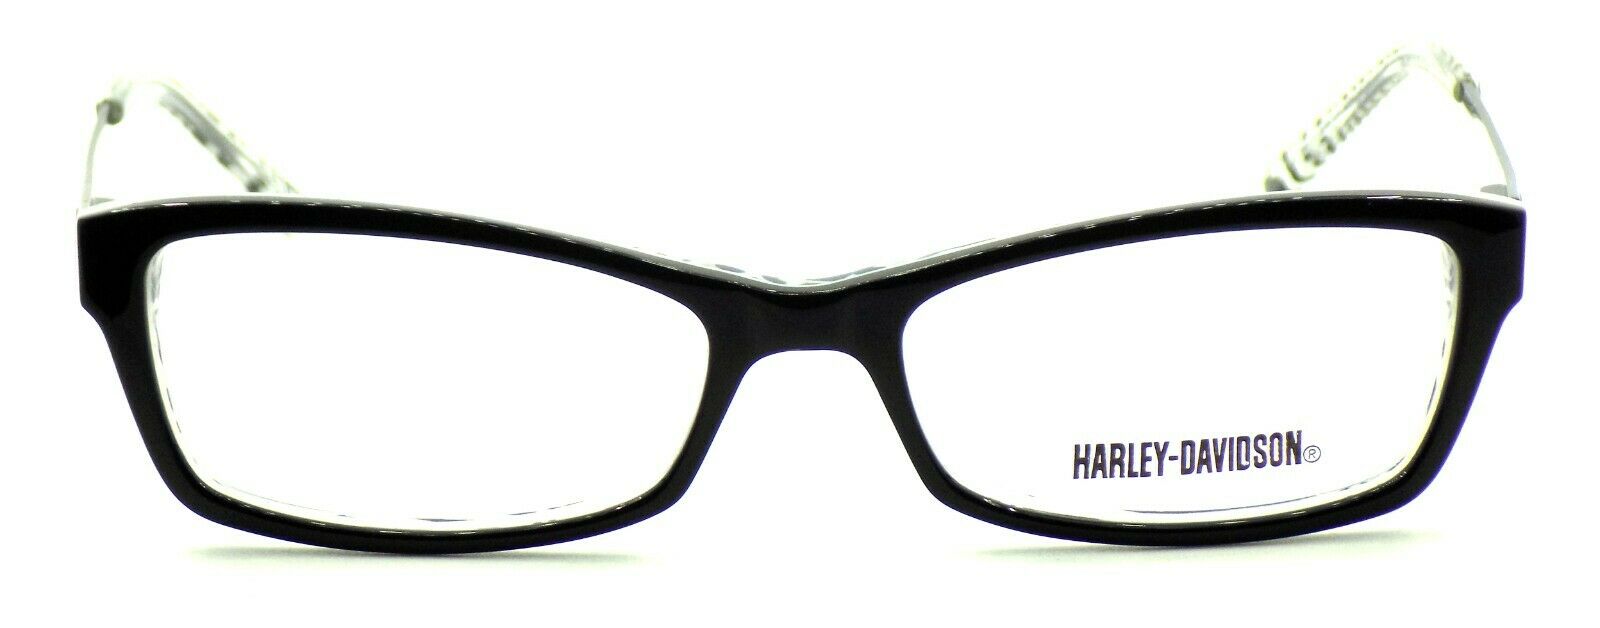 2-Harley Davidson HD509 BLK Women's Eyeglasses Frames 52-16-135 Black-715583605251-IKSpecs